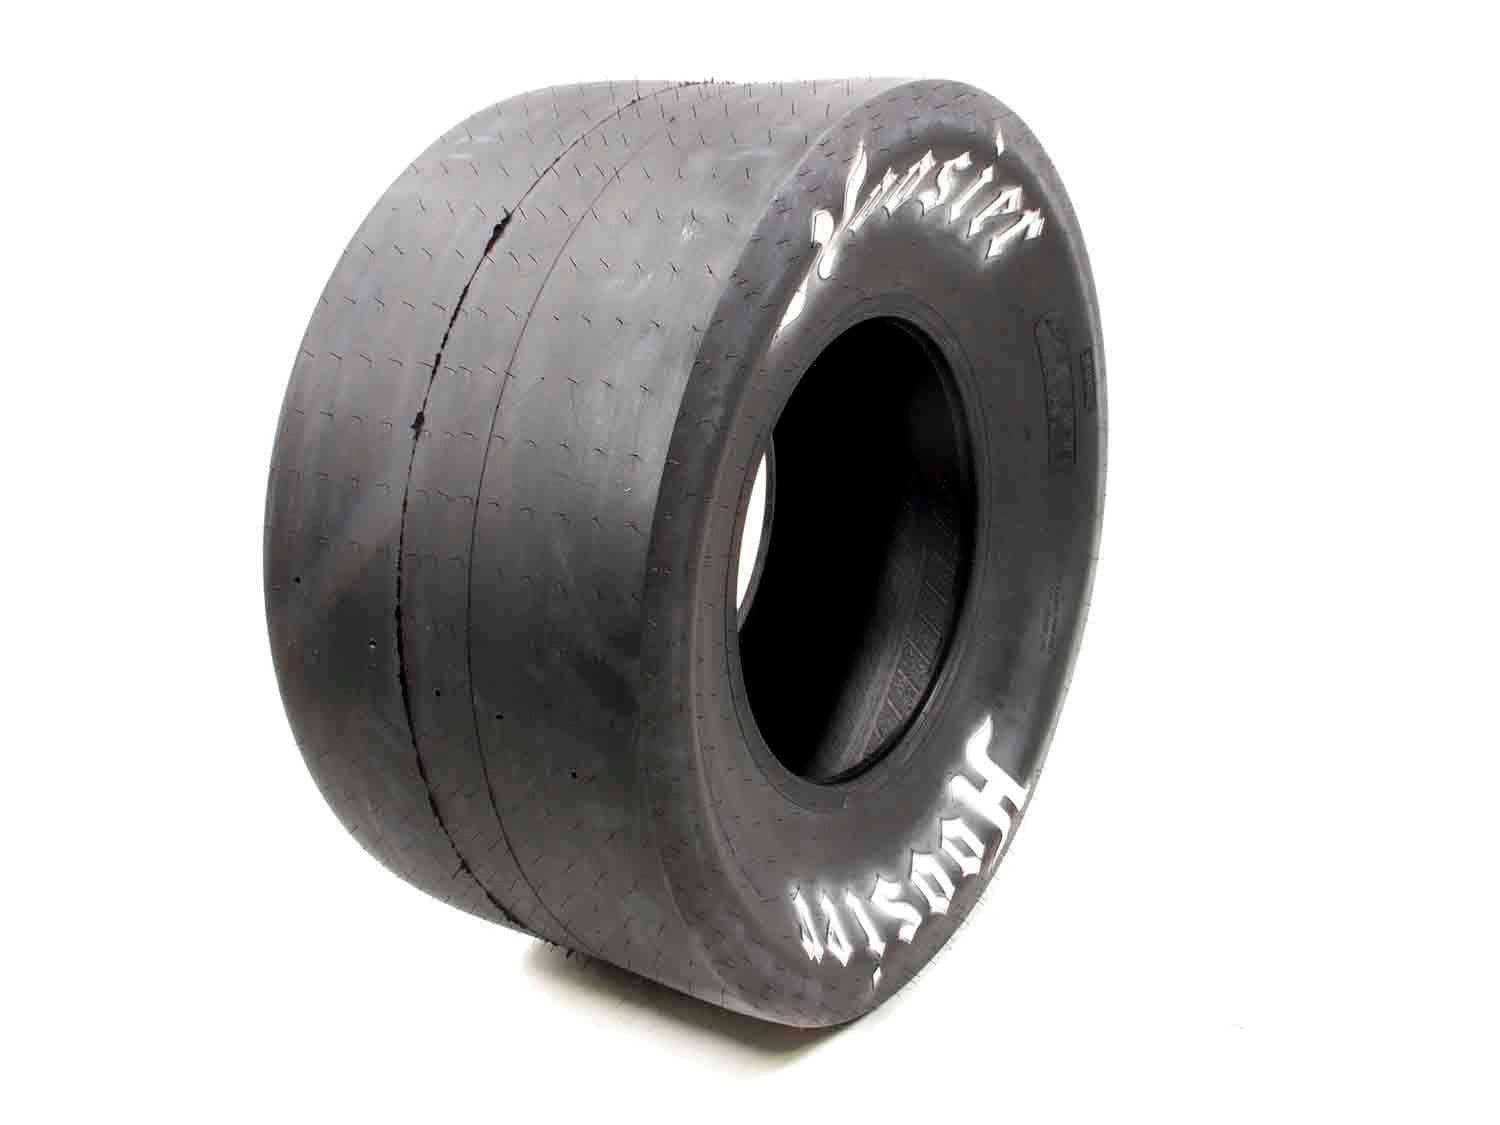 30.0/9-15R Radial Drag Tire - L/W - Burlile Performance Products